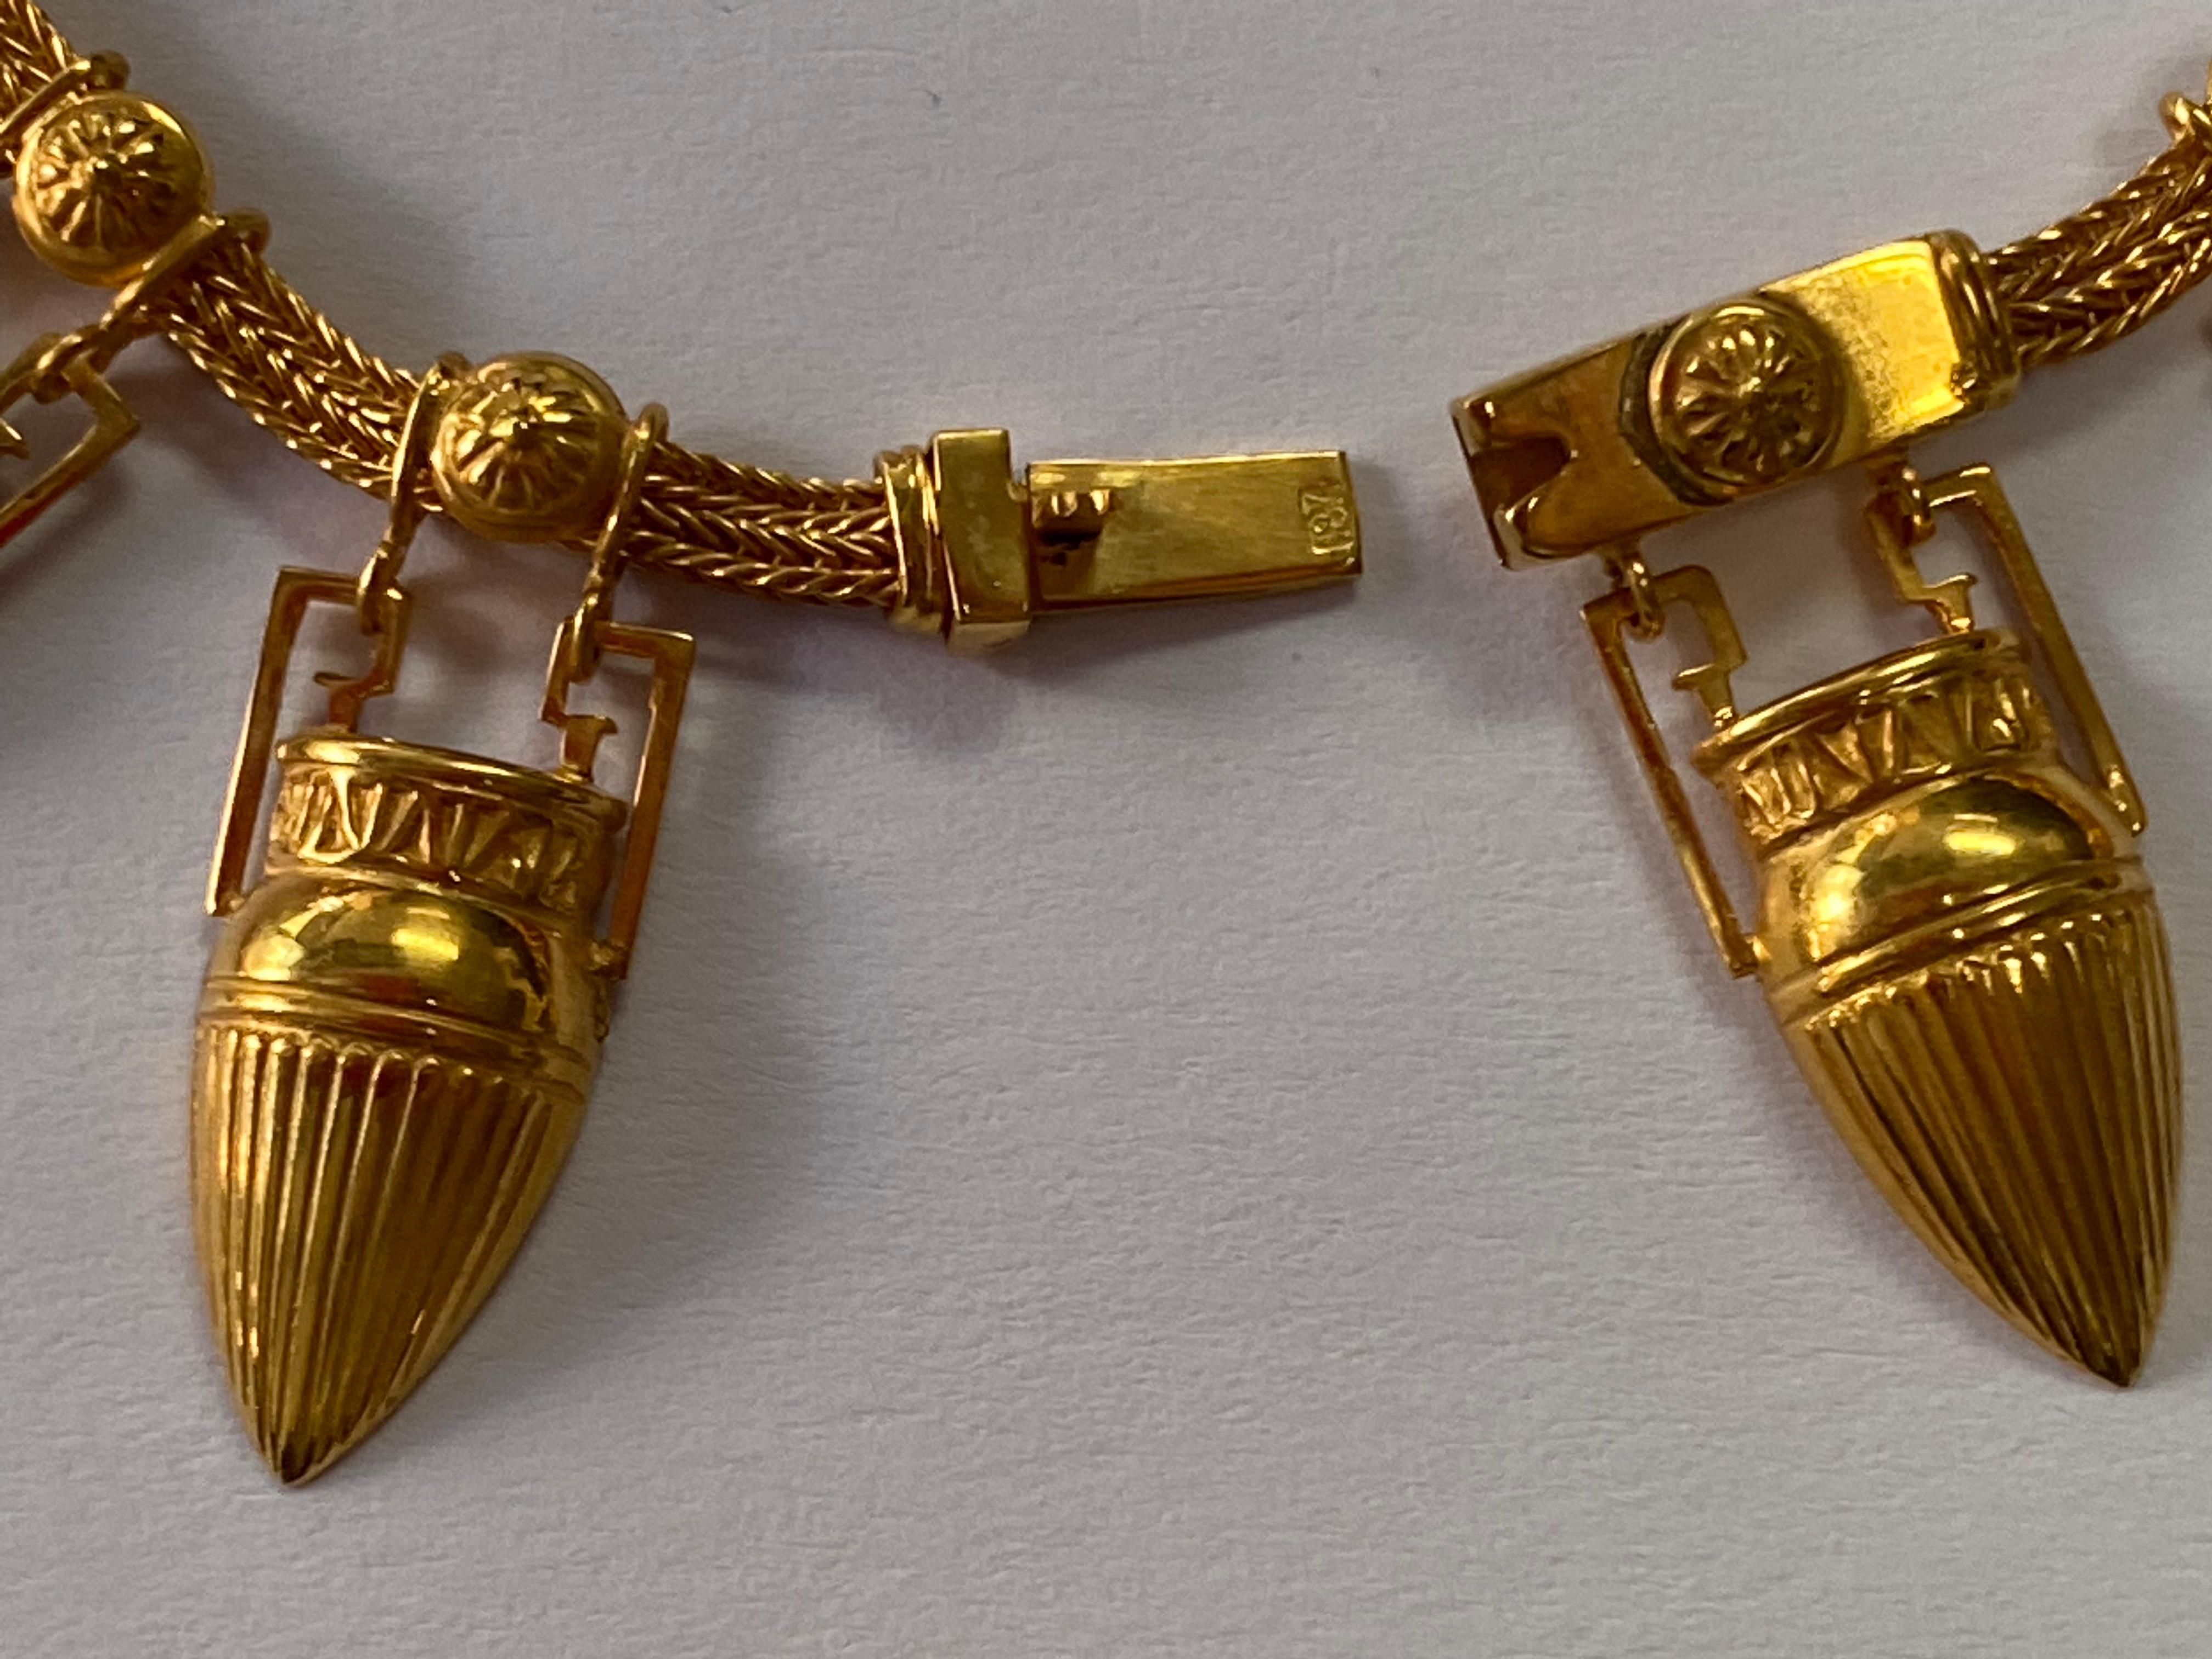 Castellani 18kt Gold Amphora Necklace For Sale 1